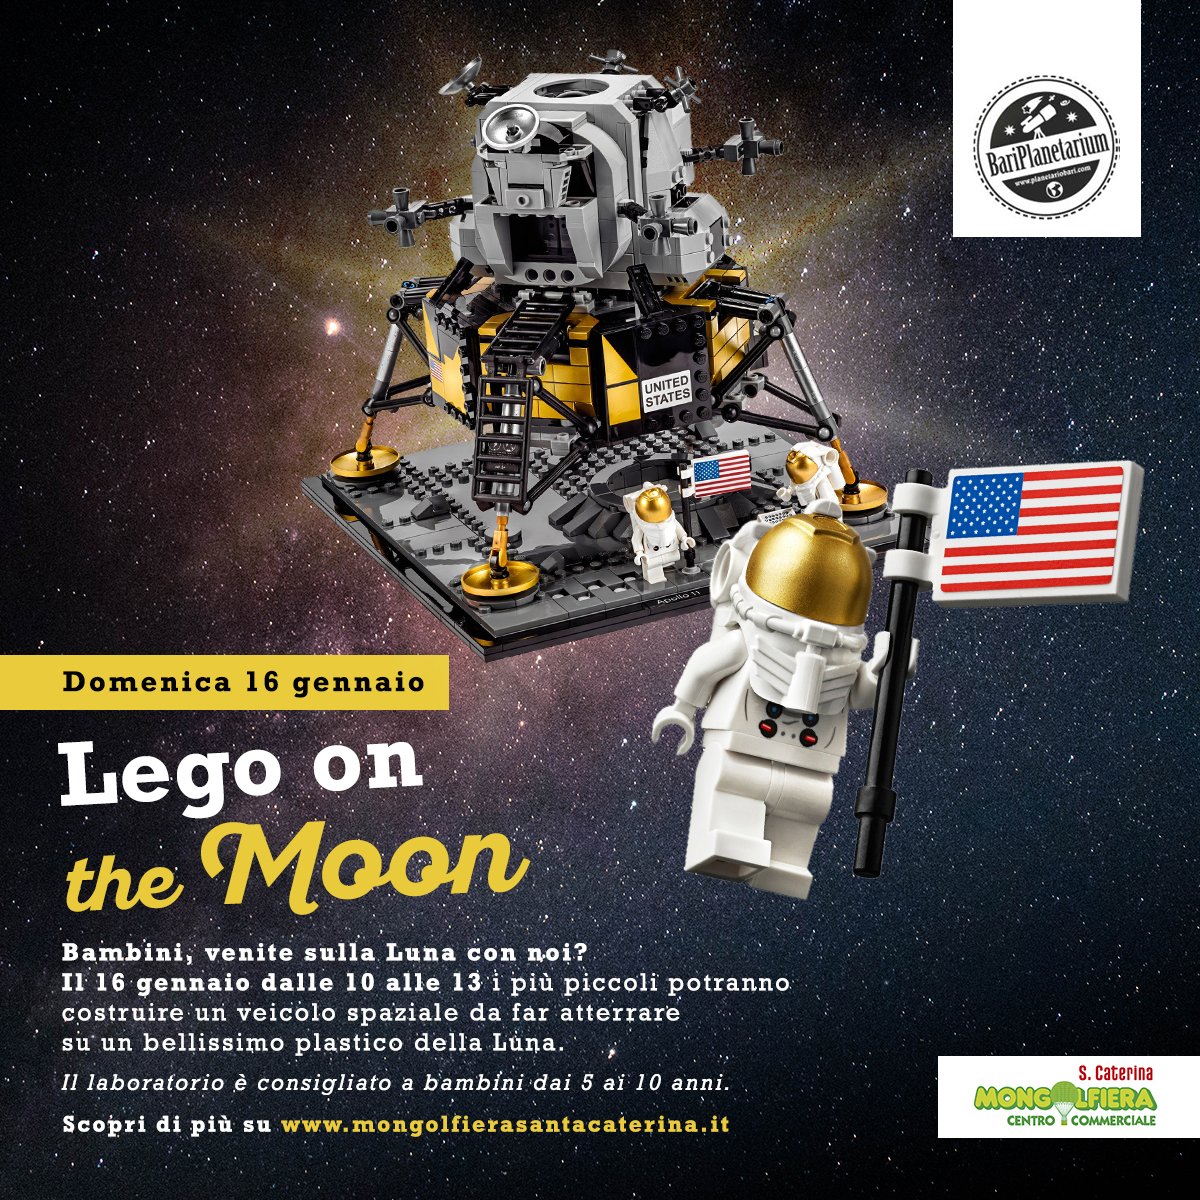 Lego on the Moon